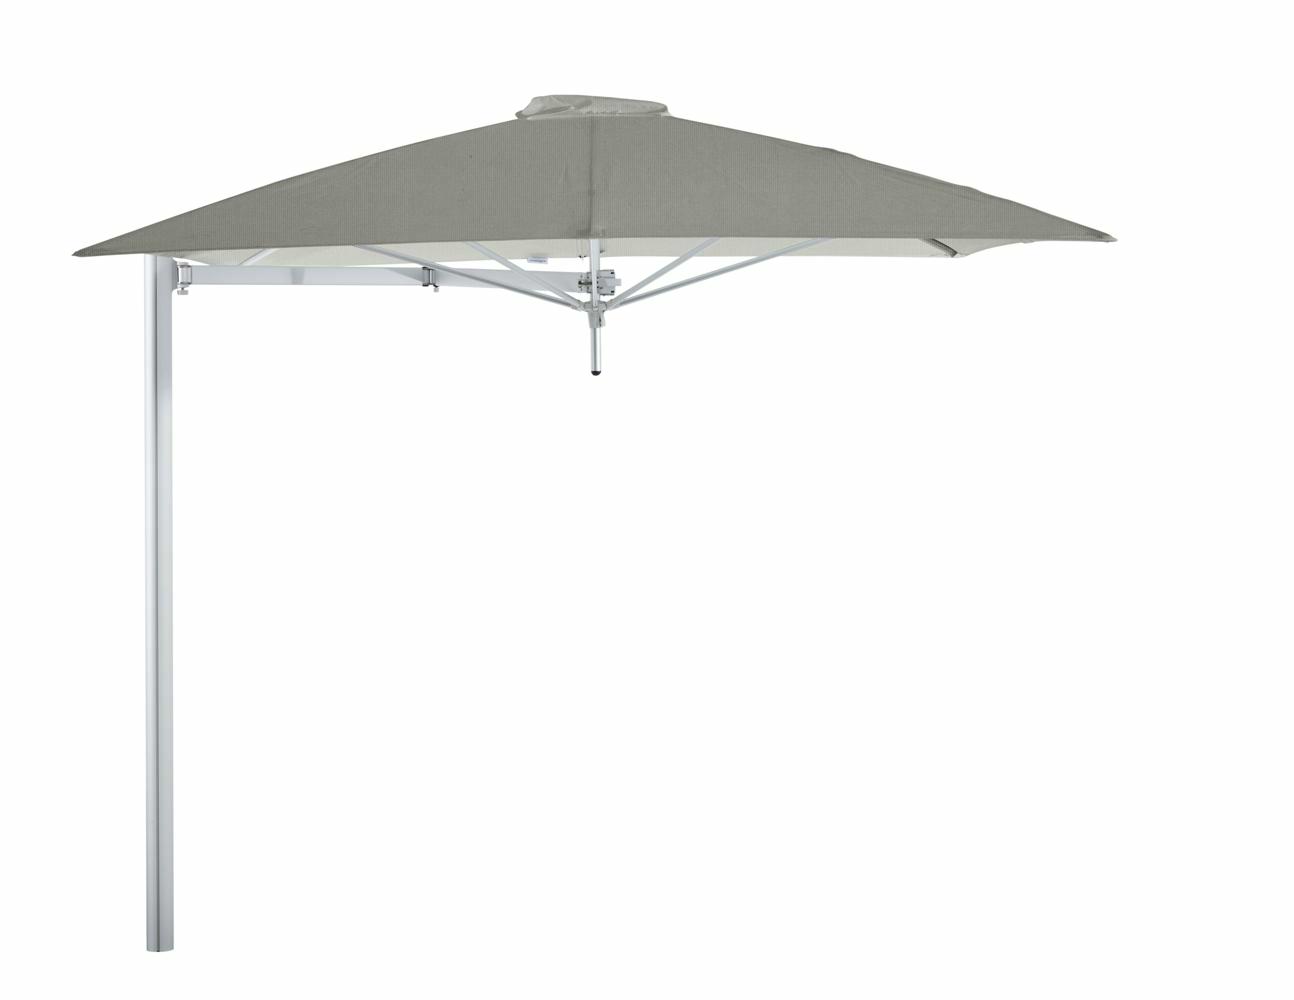 Paraflex cantilever umbrella square 2,3 m with Grey fabric and a Neo arm